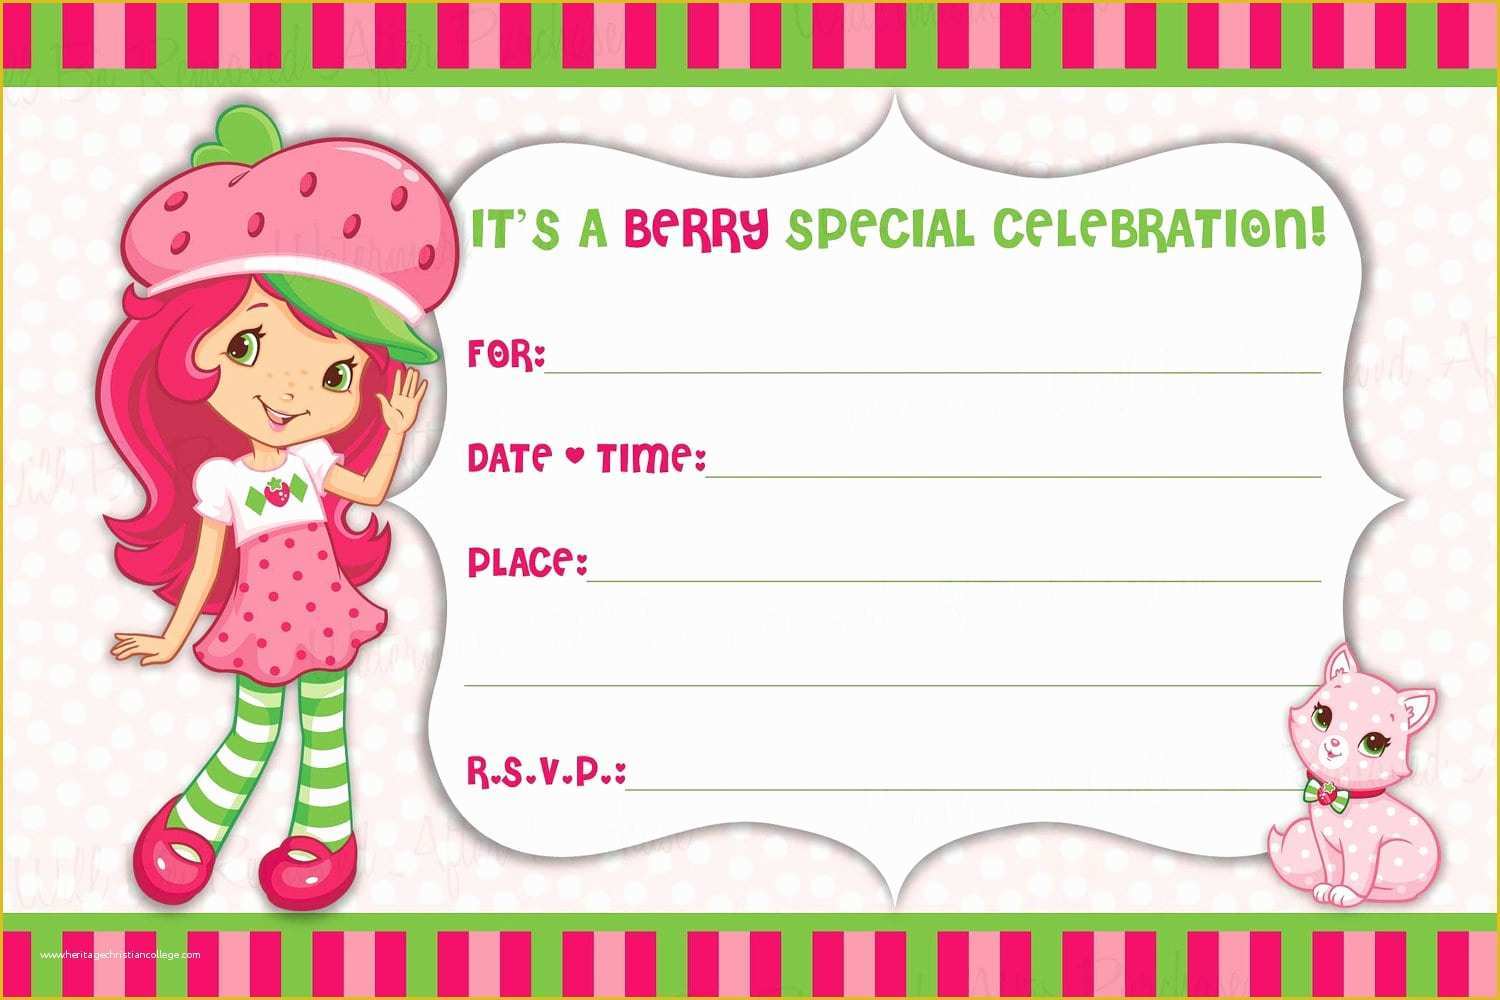 Strawberry Shortcake Invitation Template Free Download Of Strawberry Shortcake Invitation for Baby Shower